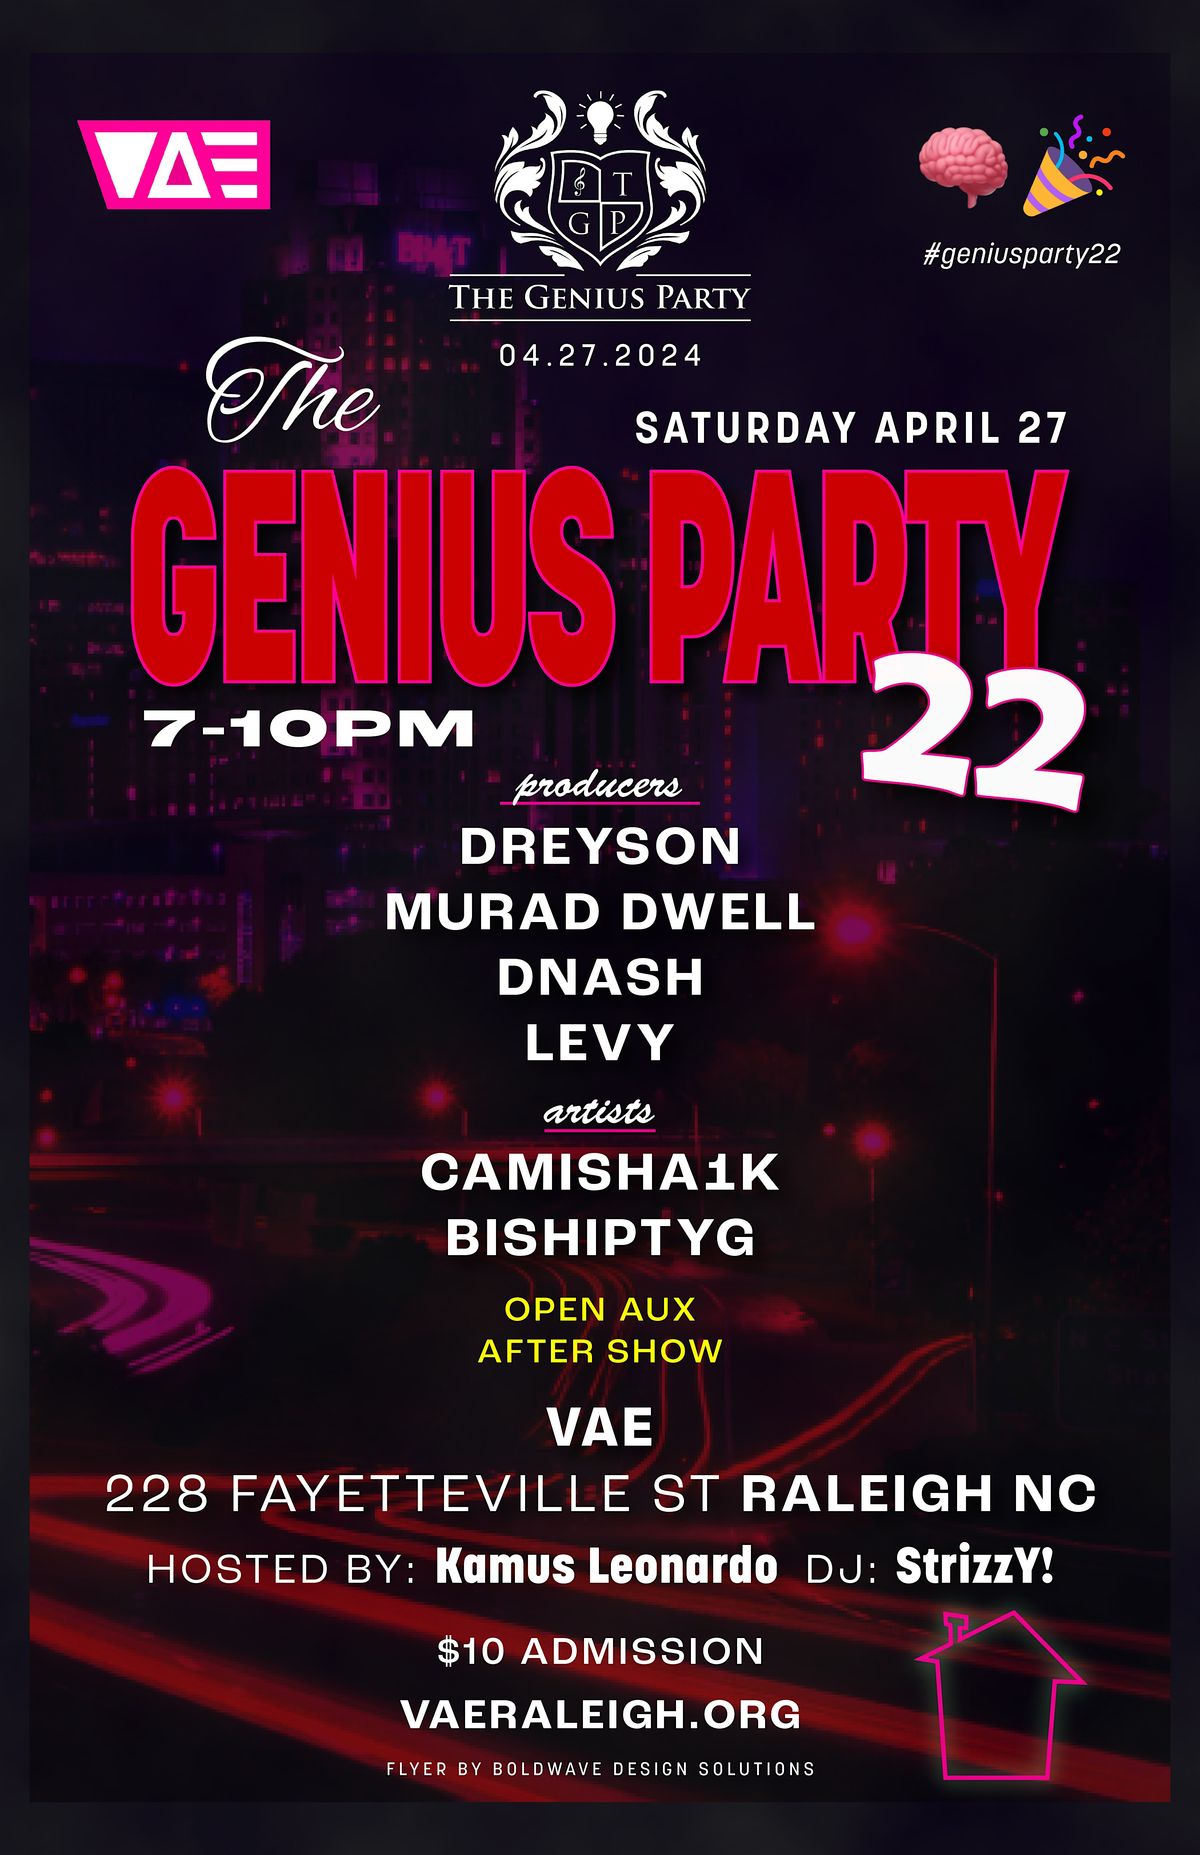 The Genius Party 22